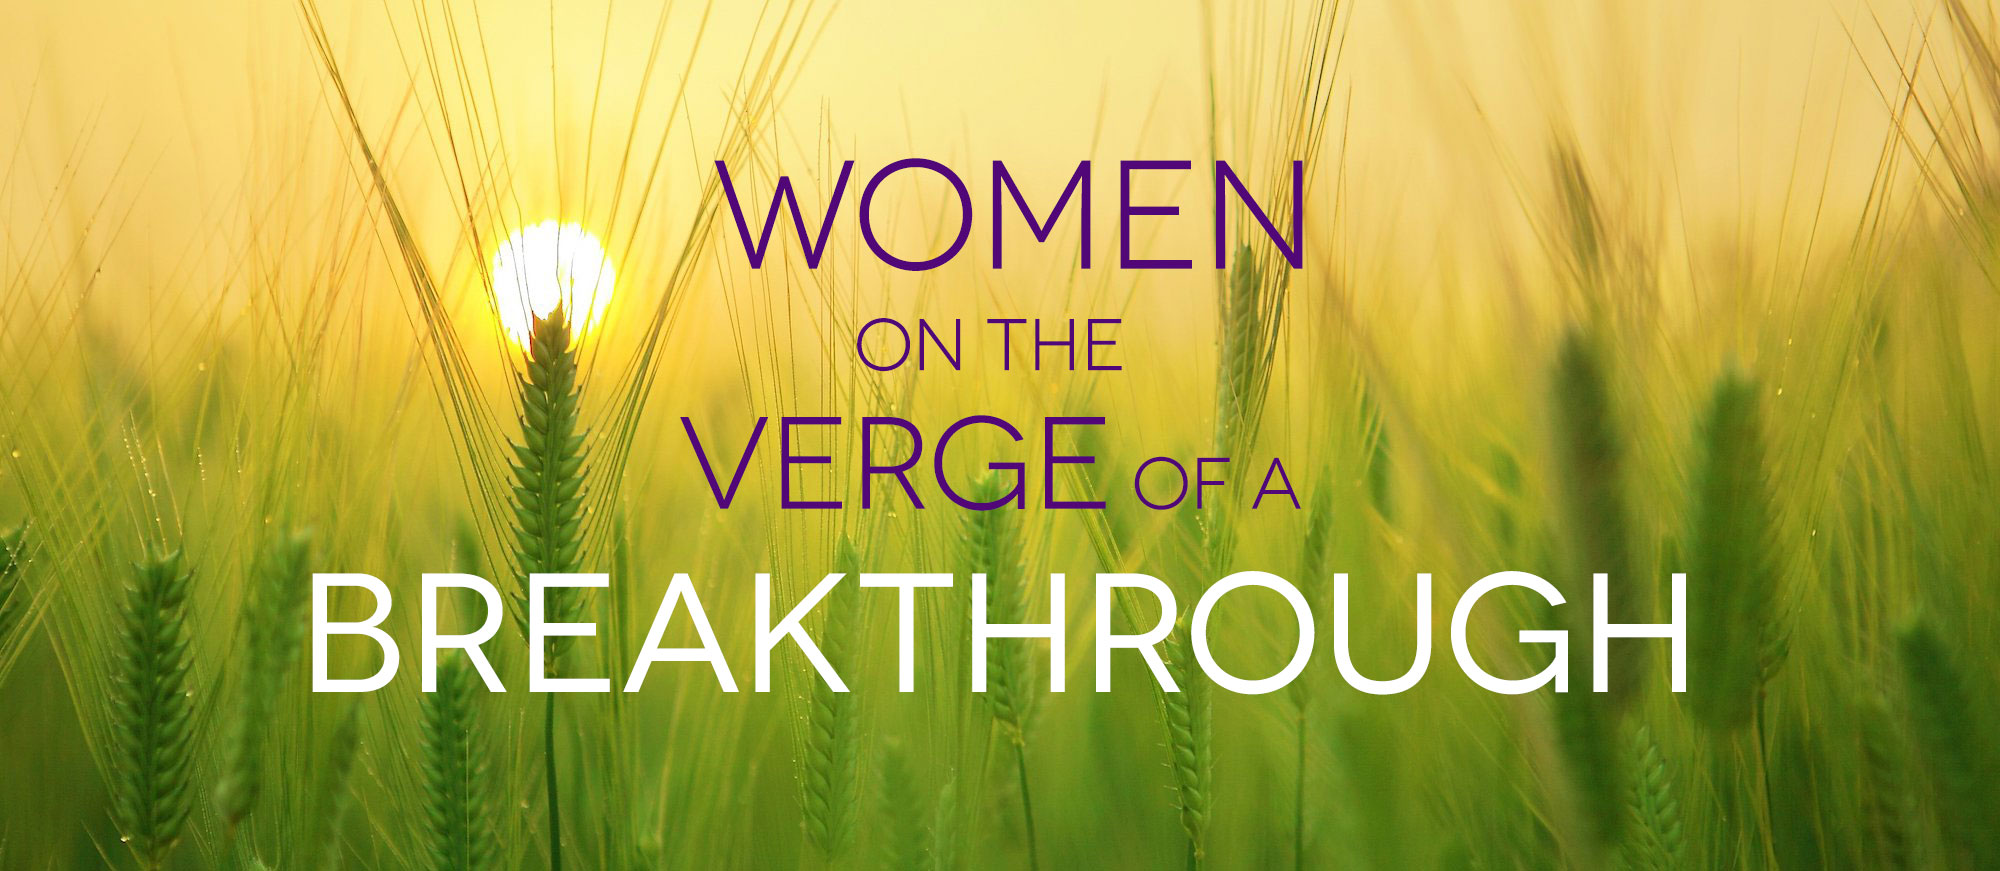 women-verge-breakthrough